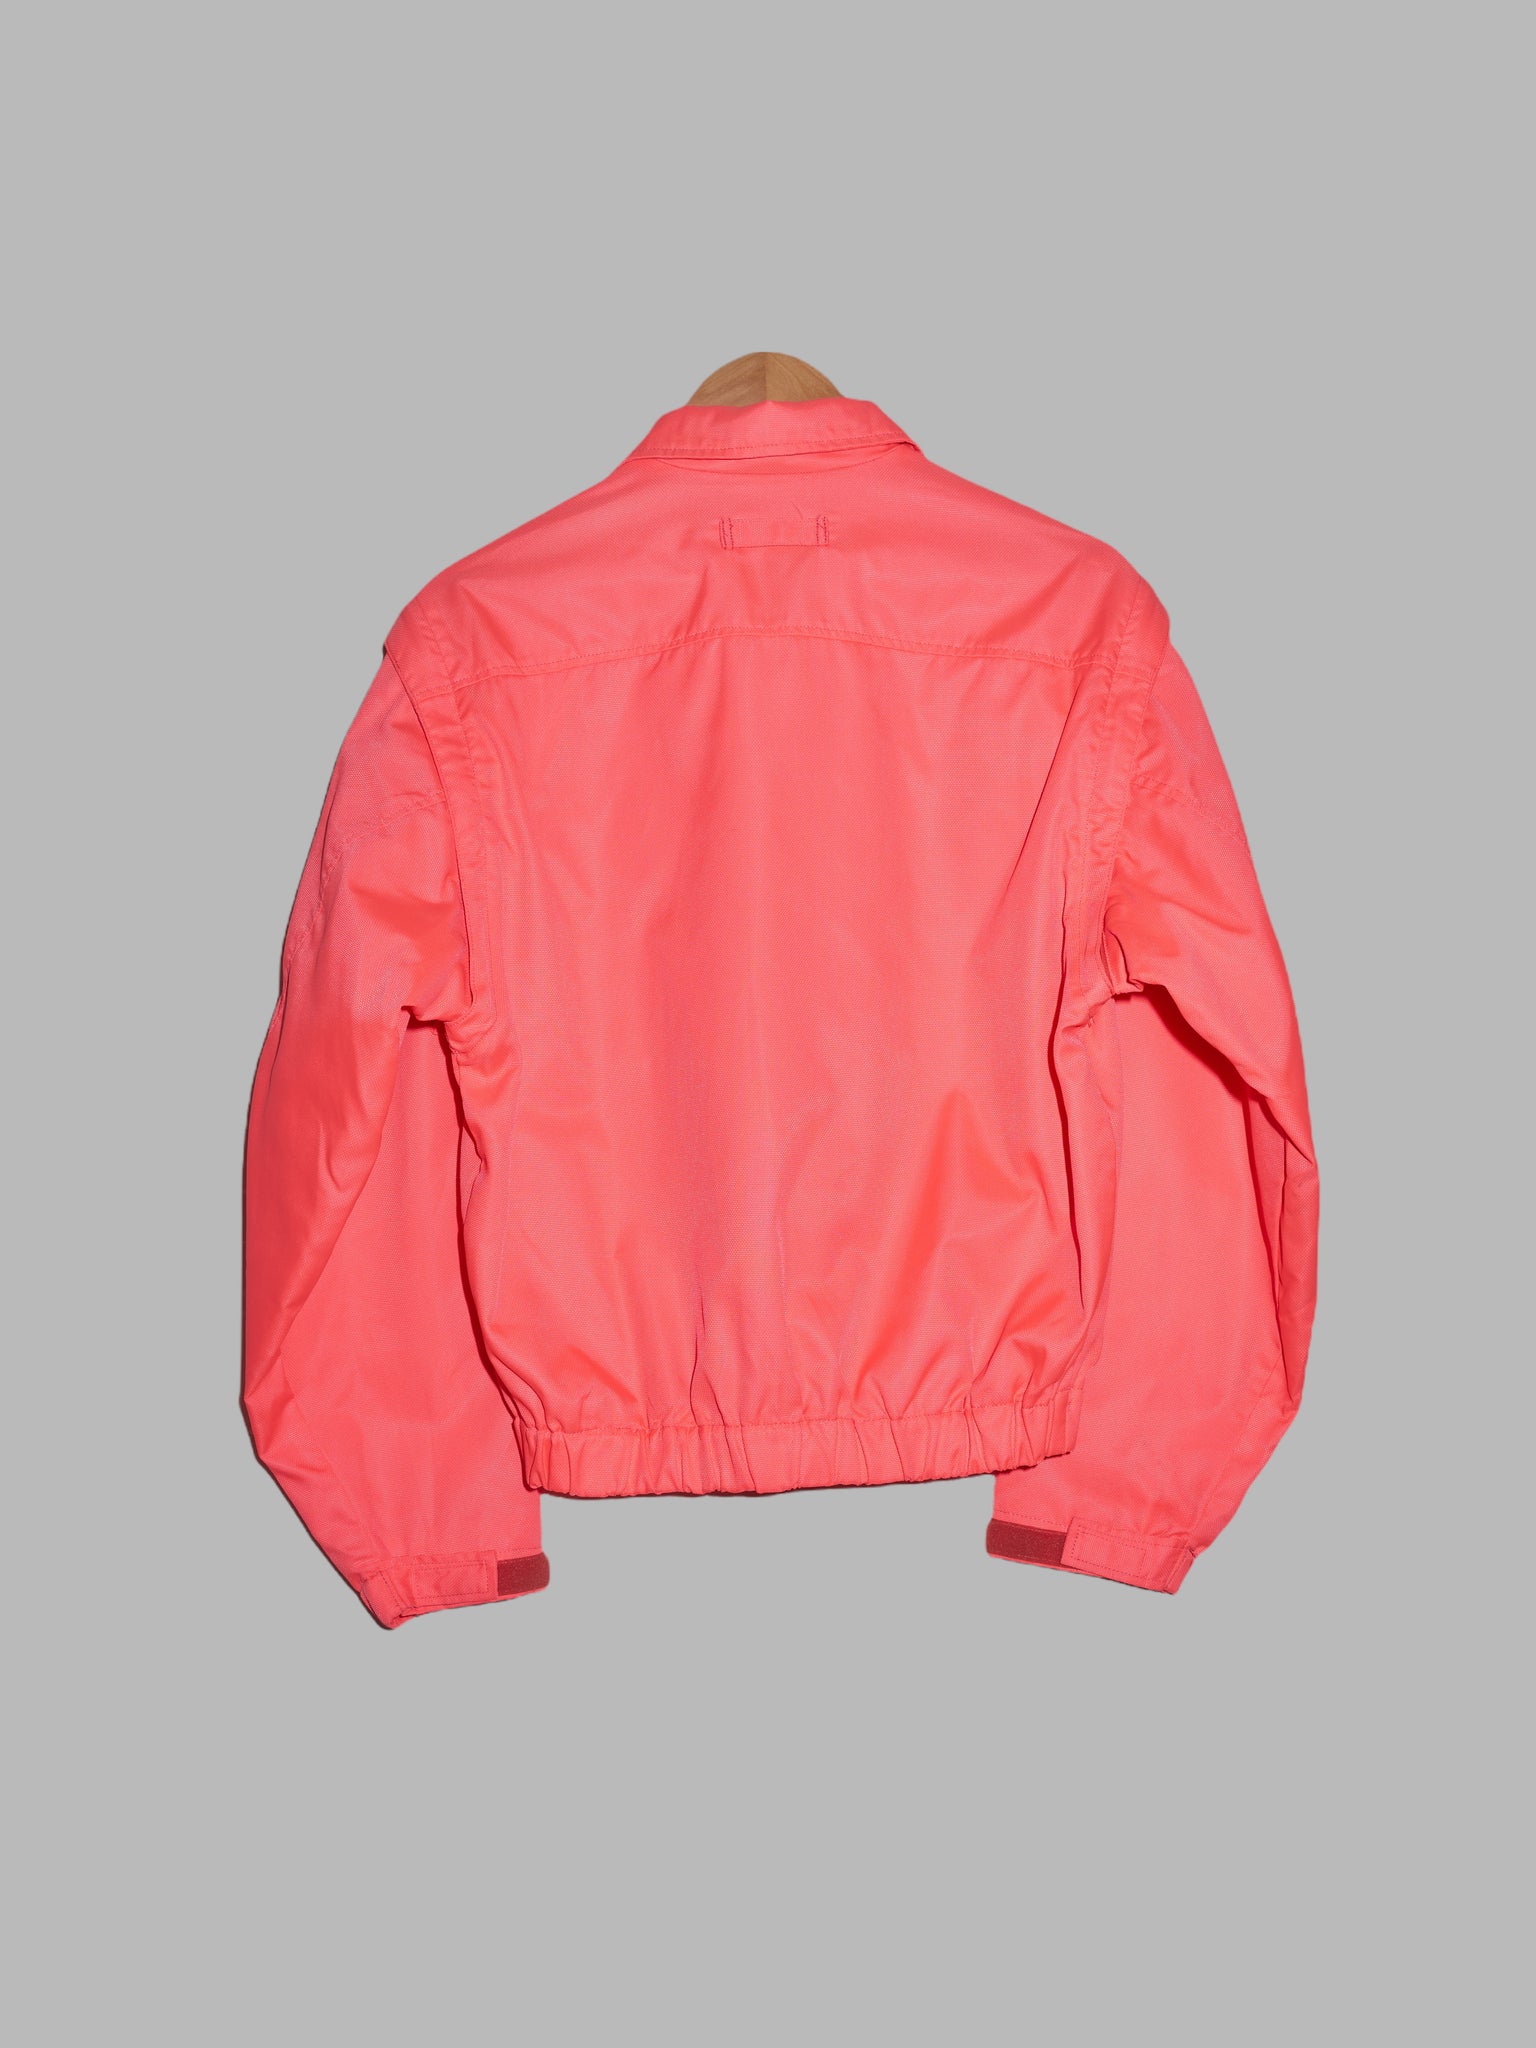 Helly Hansen 1990s fluorescent multi pocket detachable sleeve zip jacket - M